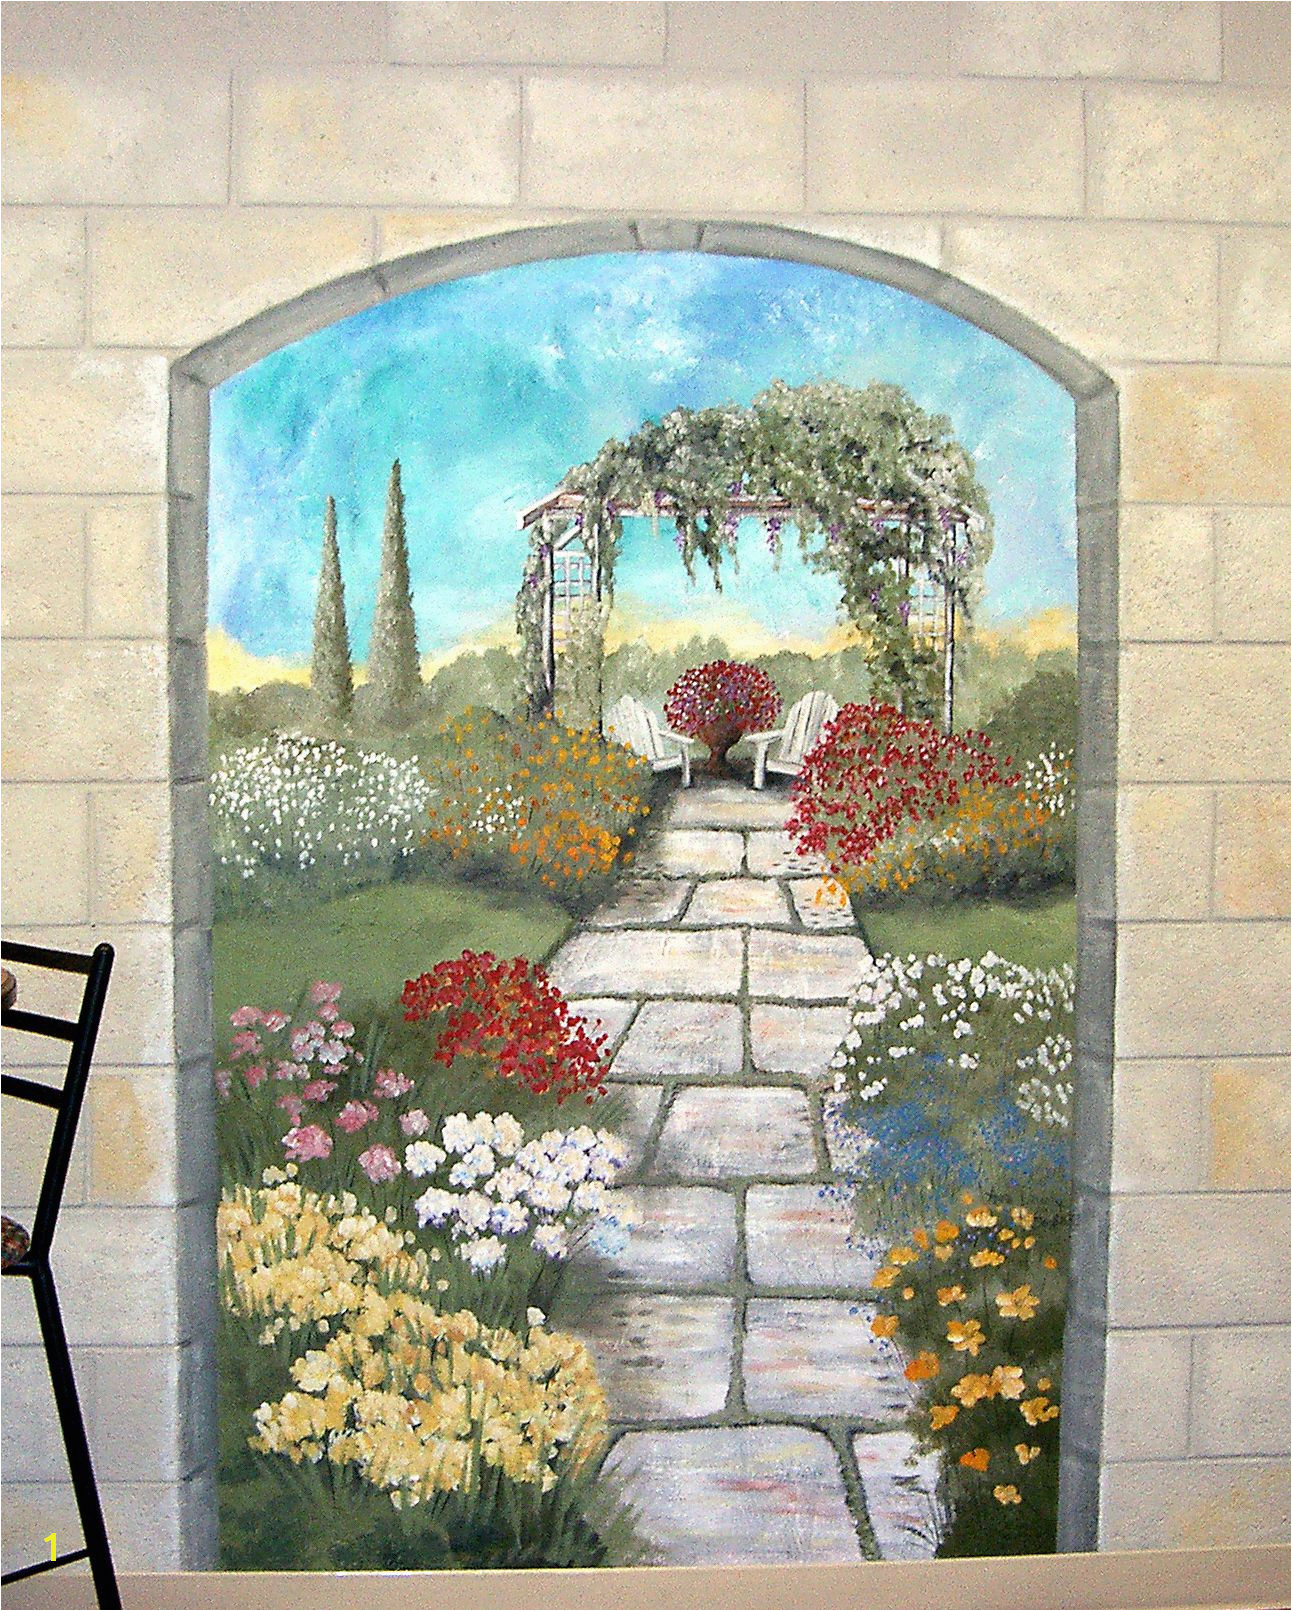 Paint A Mural On the Wall Garden Mural On A Cement Block Wall Colorful Flower Garden Mural